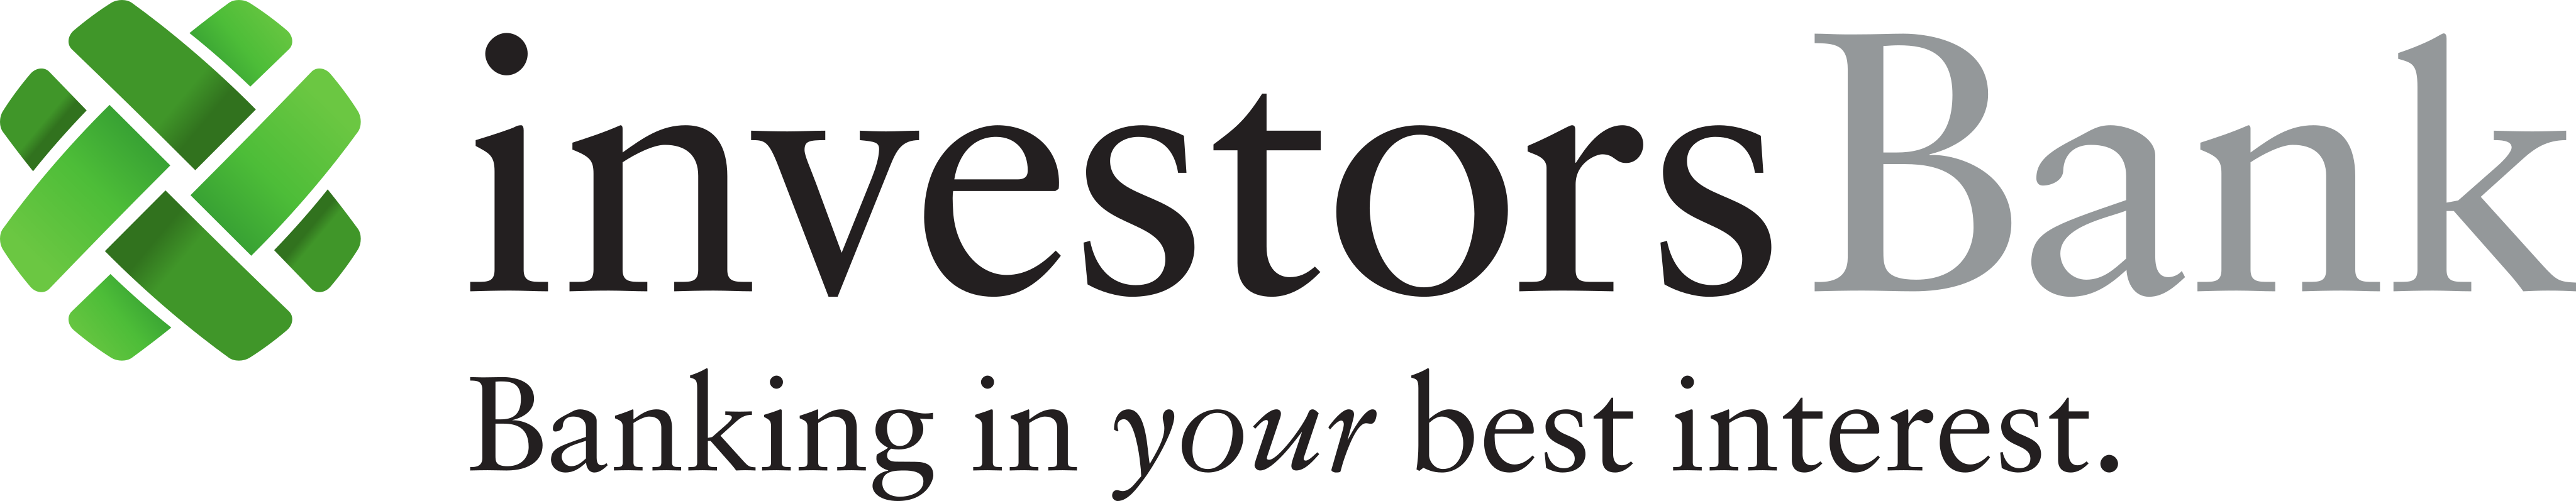 Investors Bank Logo.